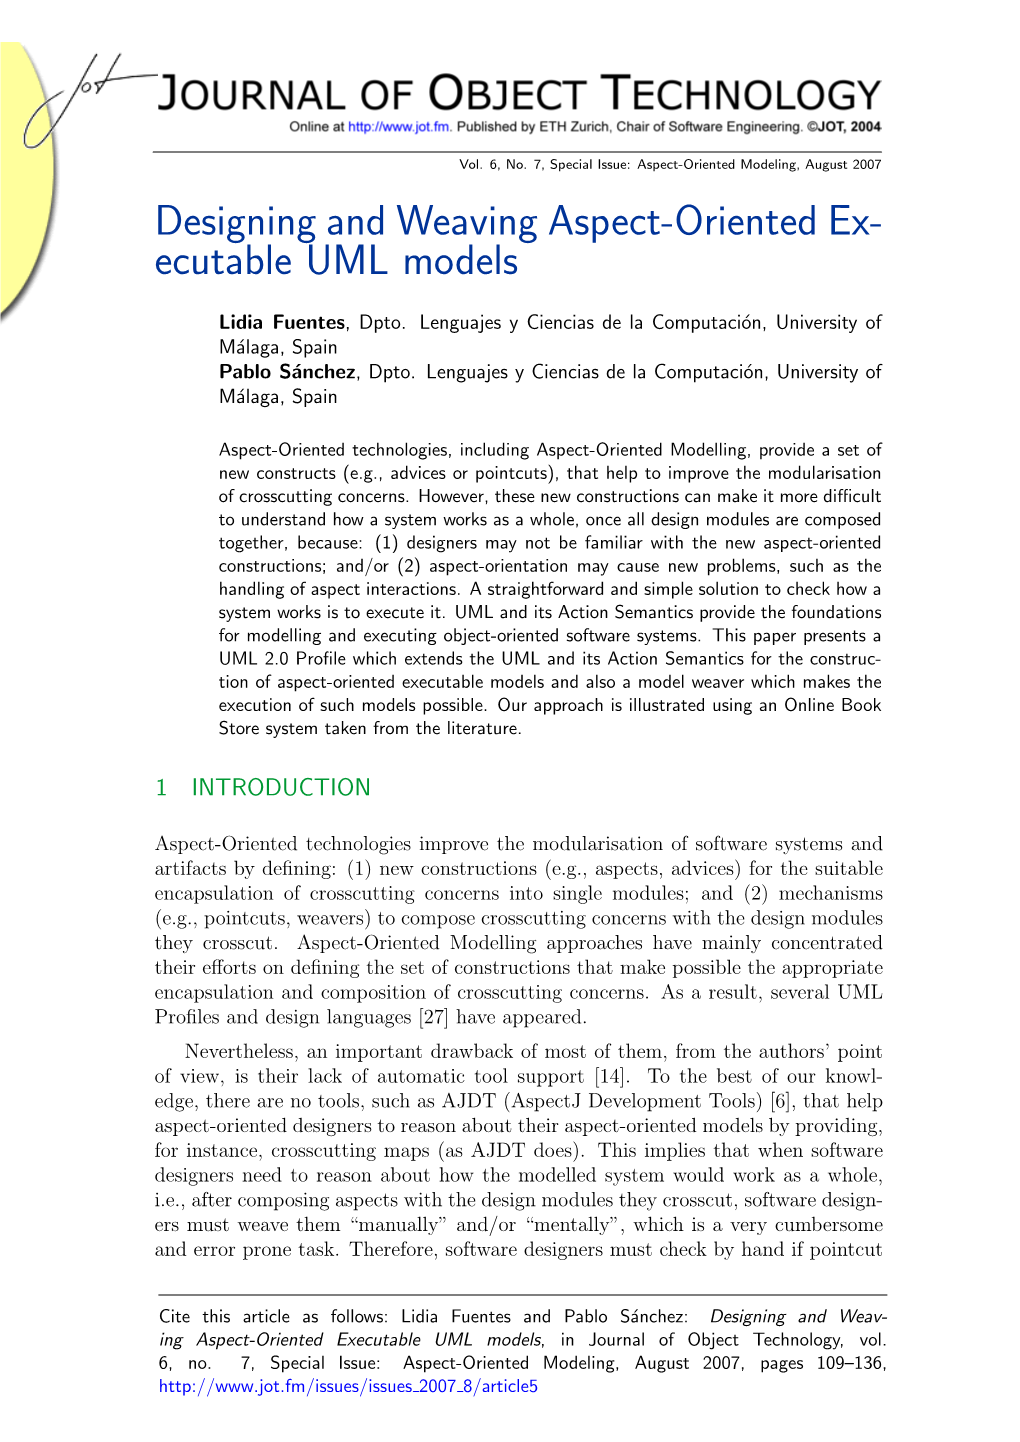 Designing and Weaving Aspect-Oriented Ex- Ecutable UML Models